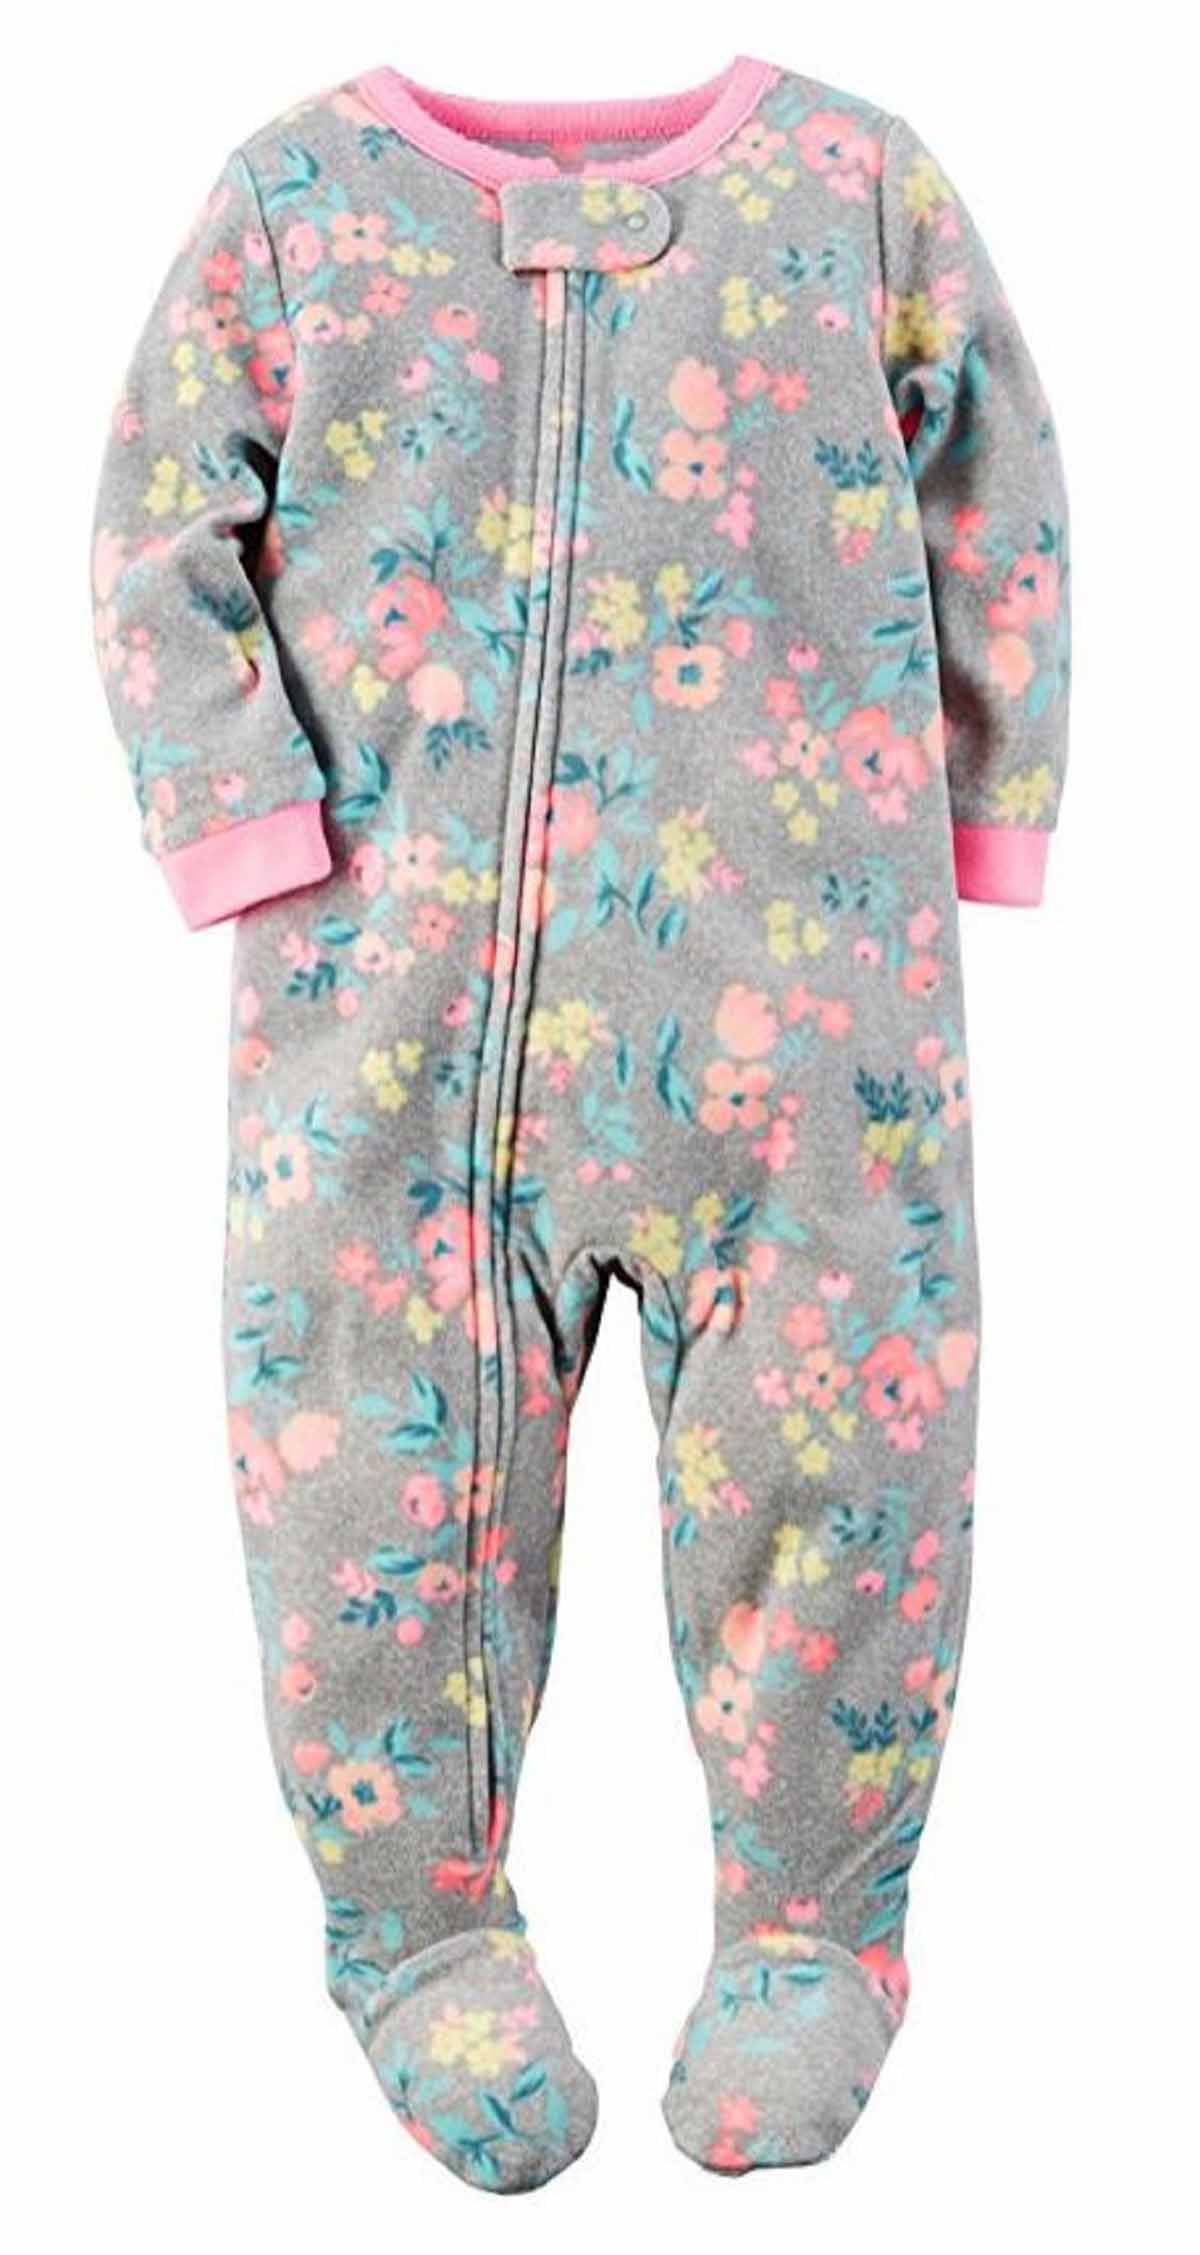 NEW Carter's Girl's Footed 1 Piece Zip Up Fleece Sleepwear Pajamas 